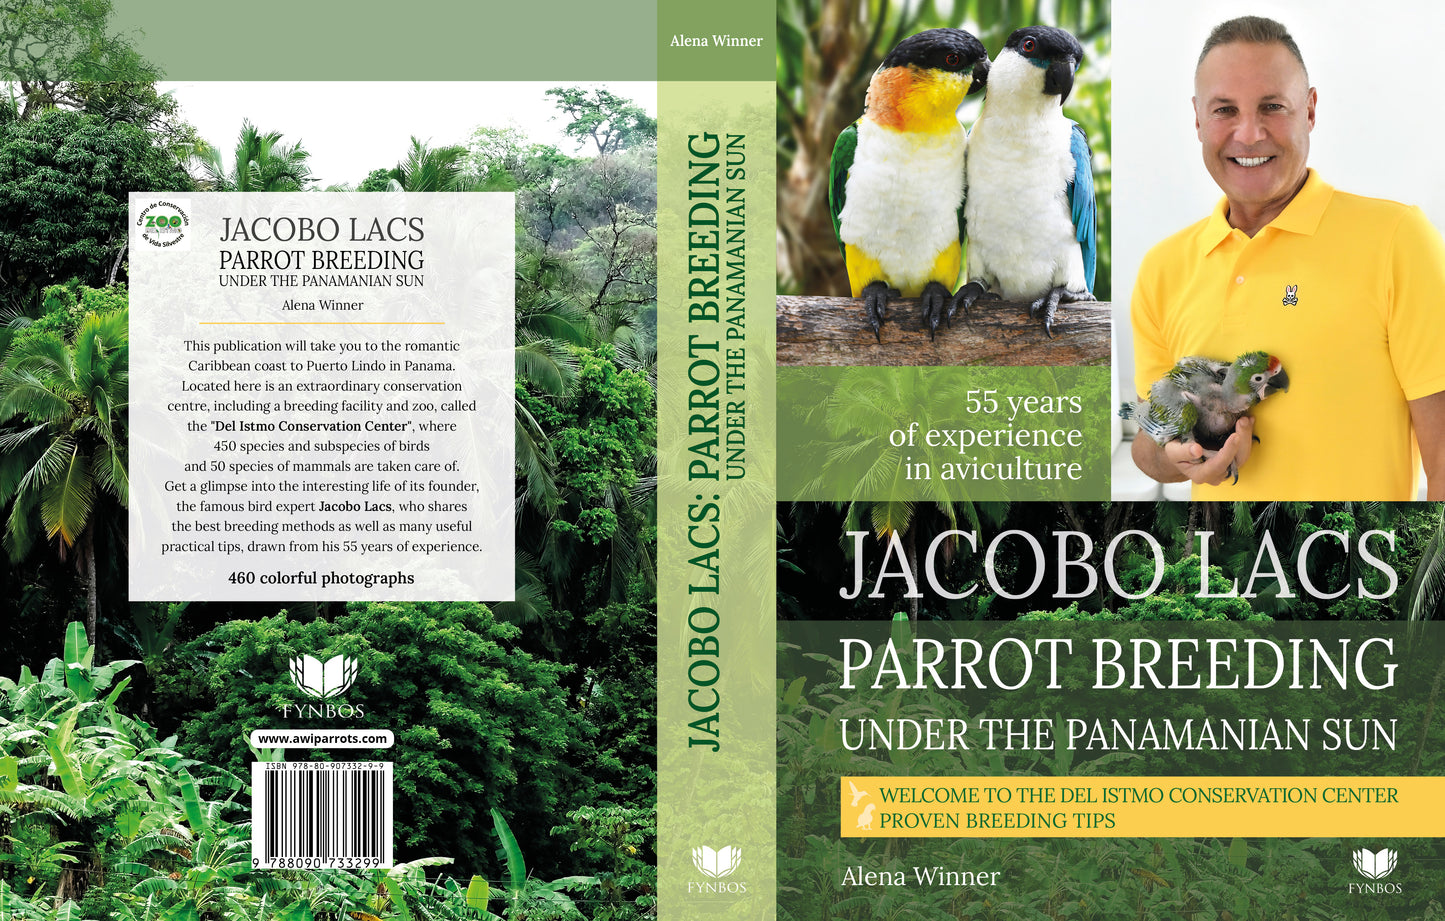 JACOBO LACS: Parrot breeding under the Panamanian sun